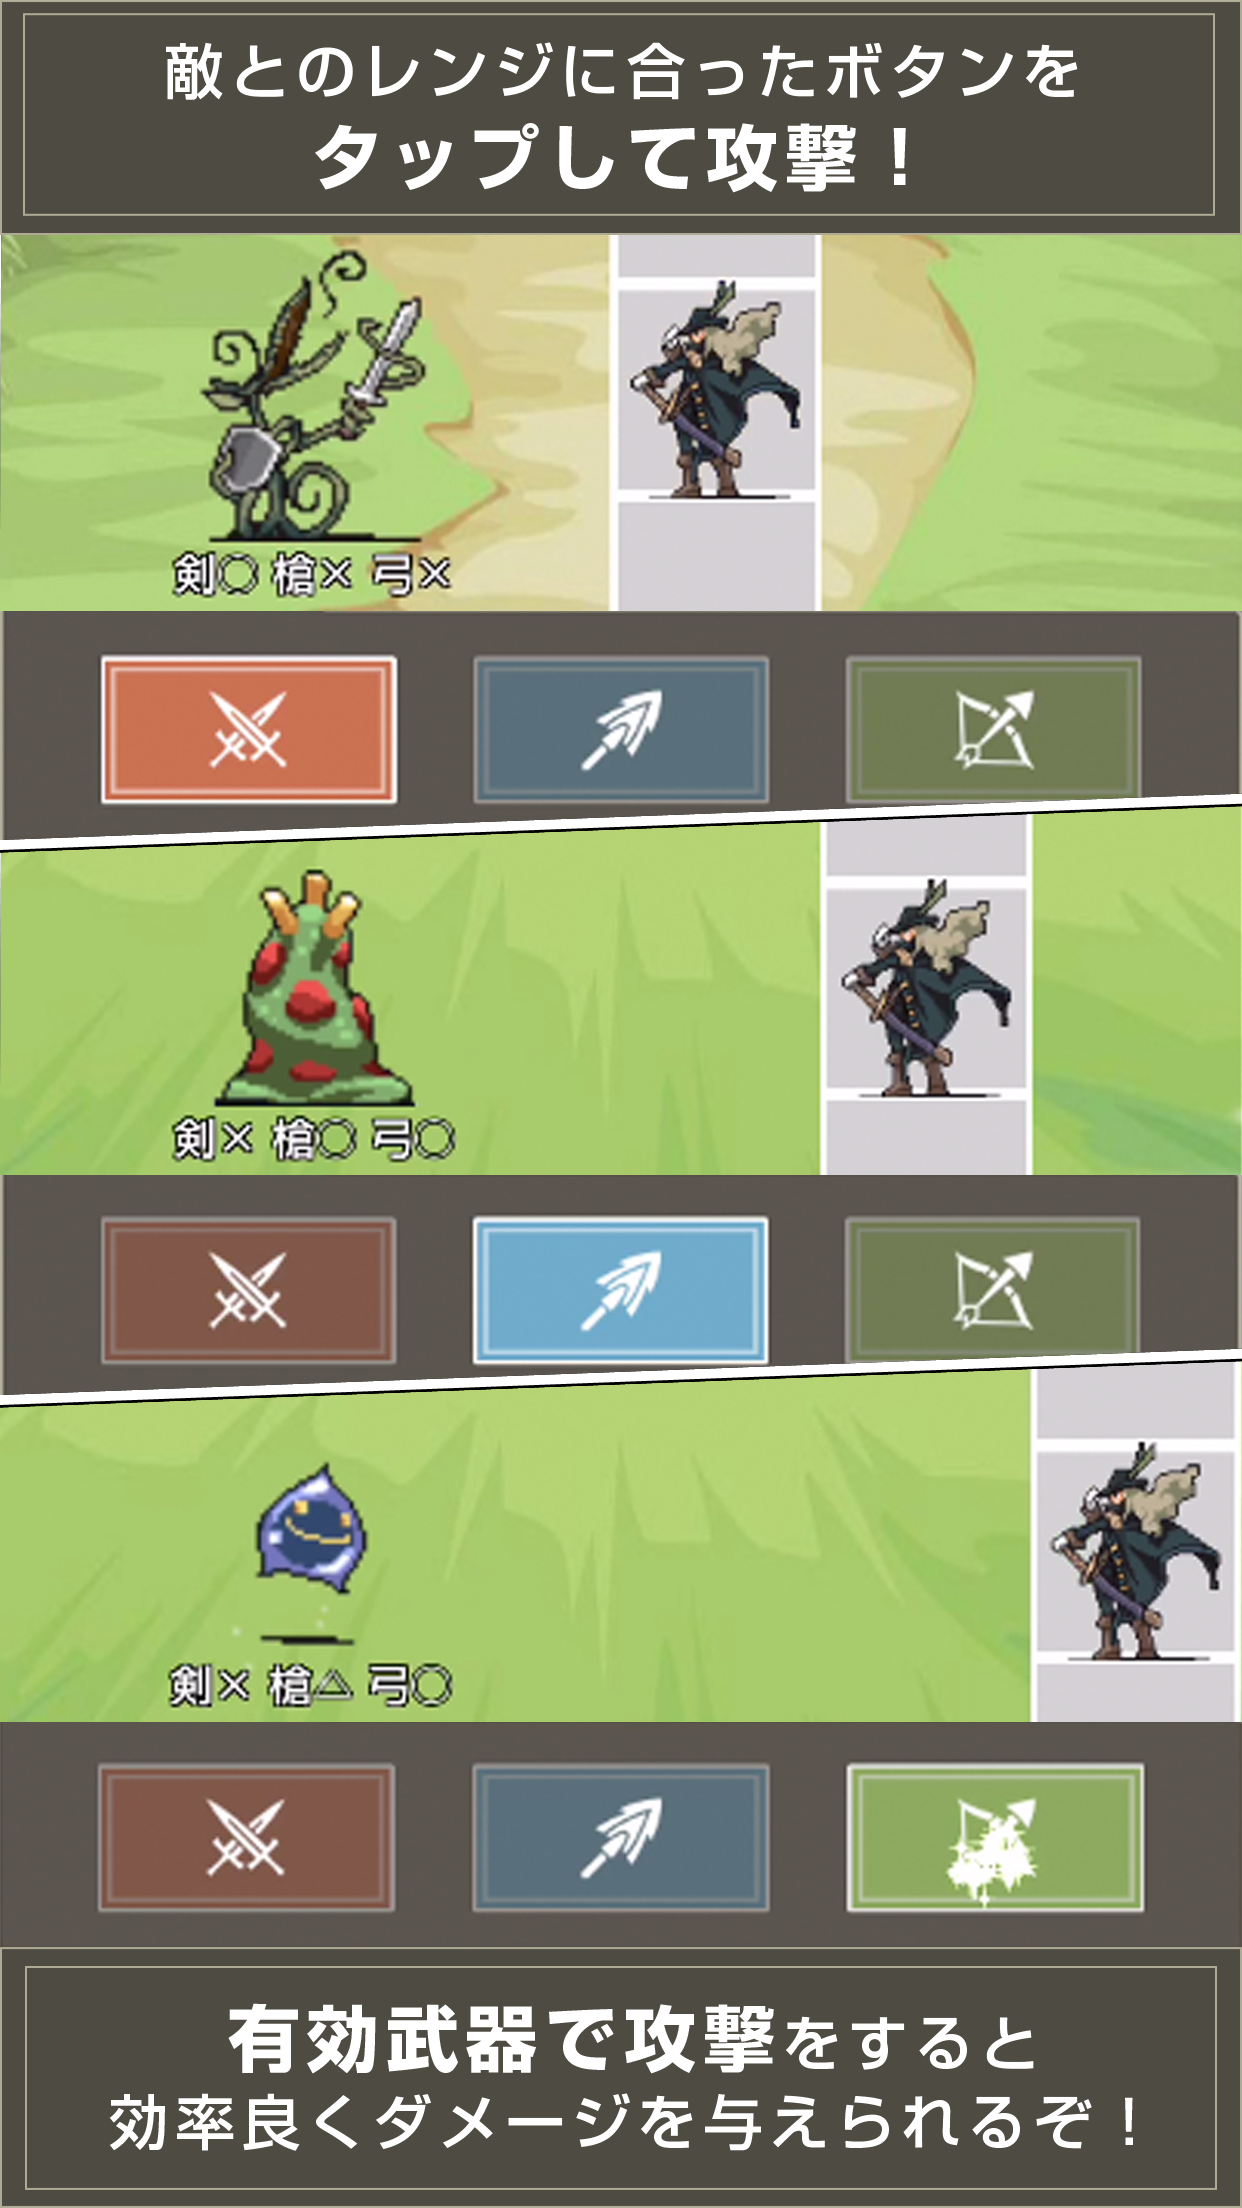 Screenshot 1 of ポジスラ - Position & Slash Battle 1.4